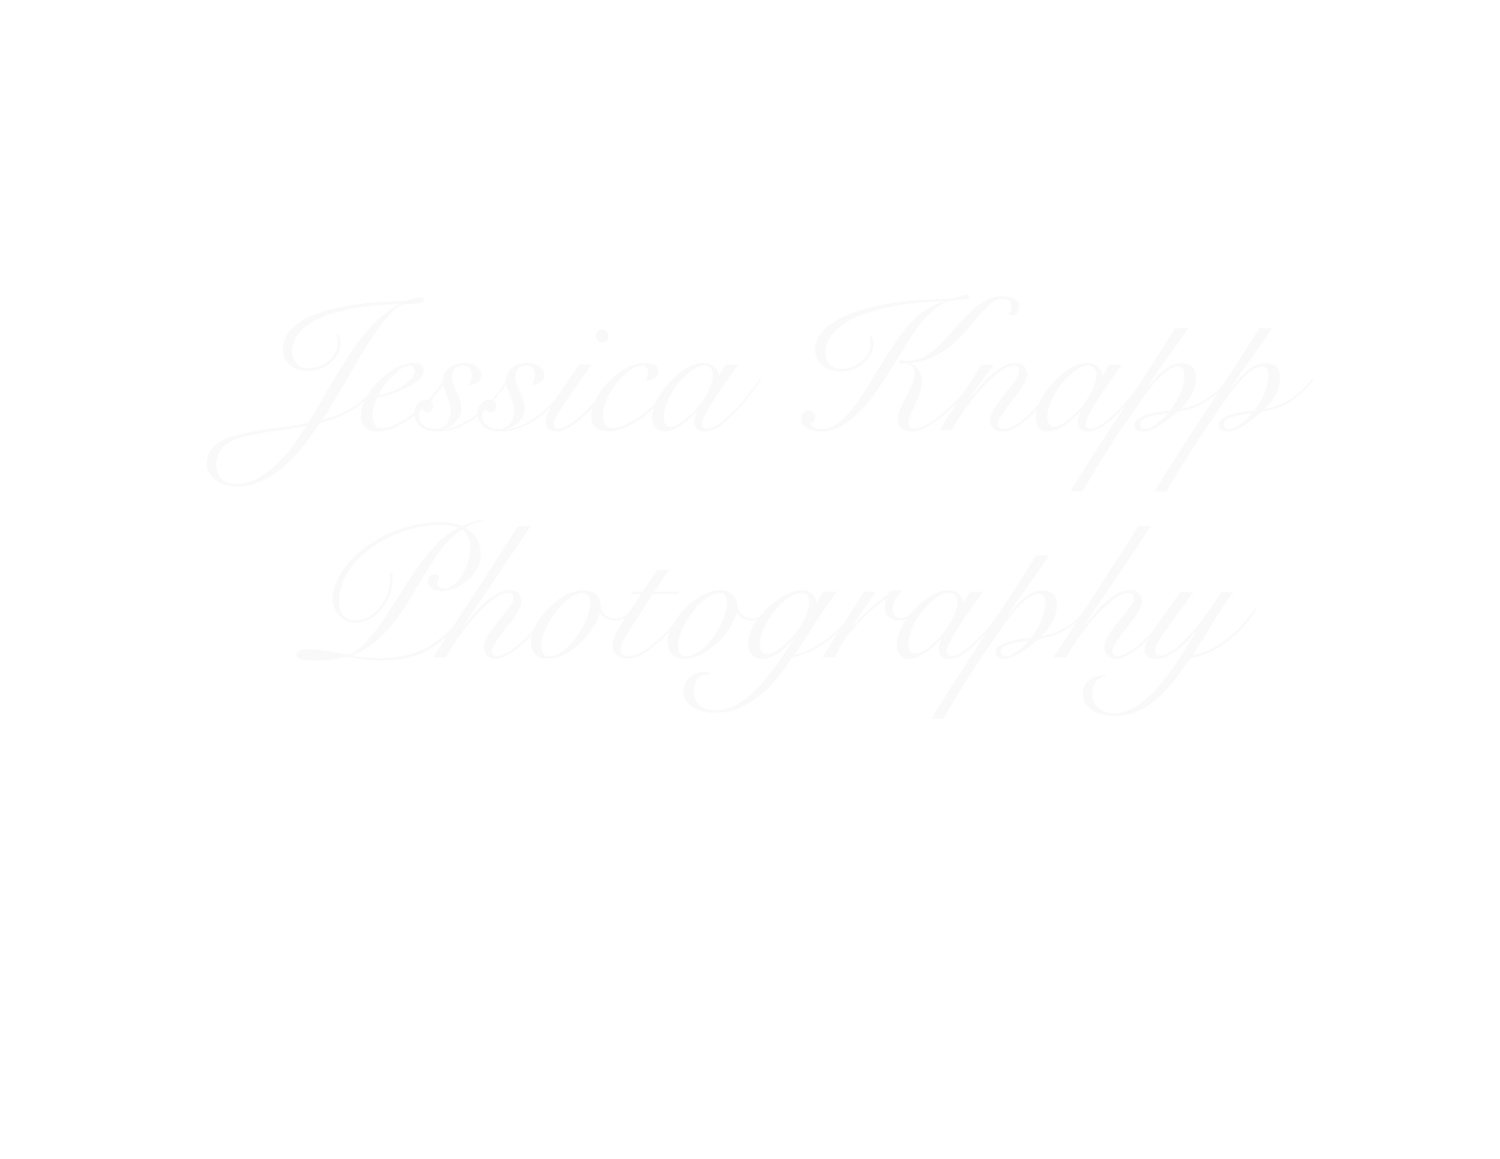 Jessica Knapp